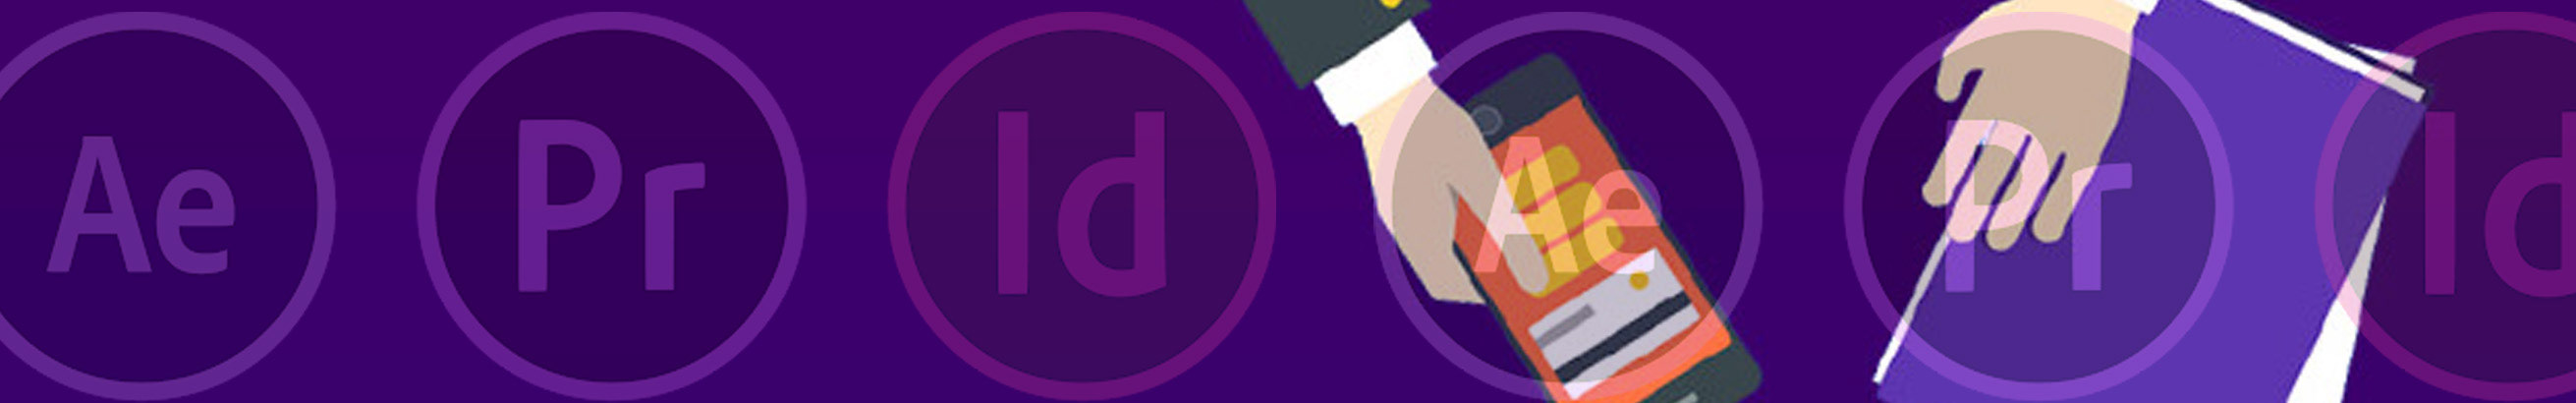 Dizipix .Com's profile banner